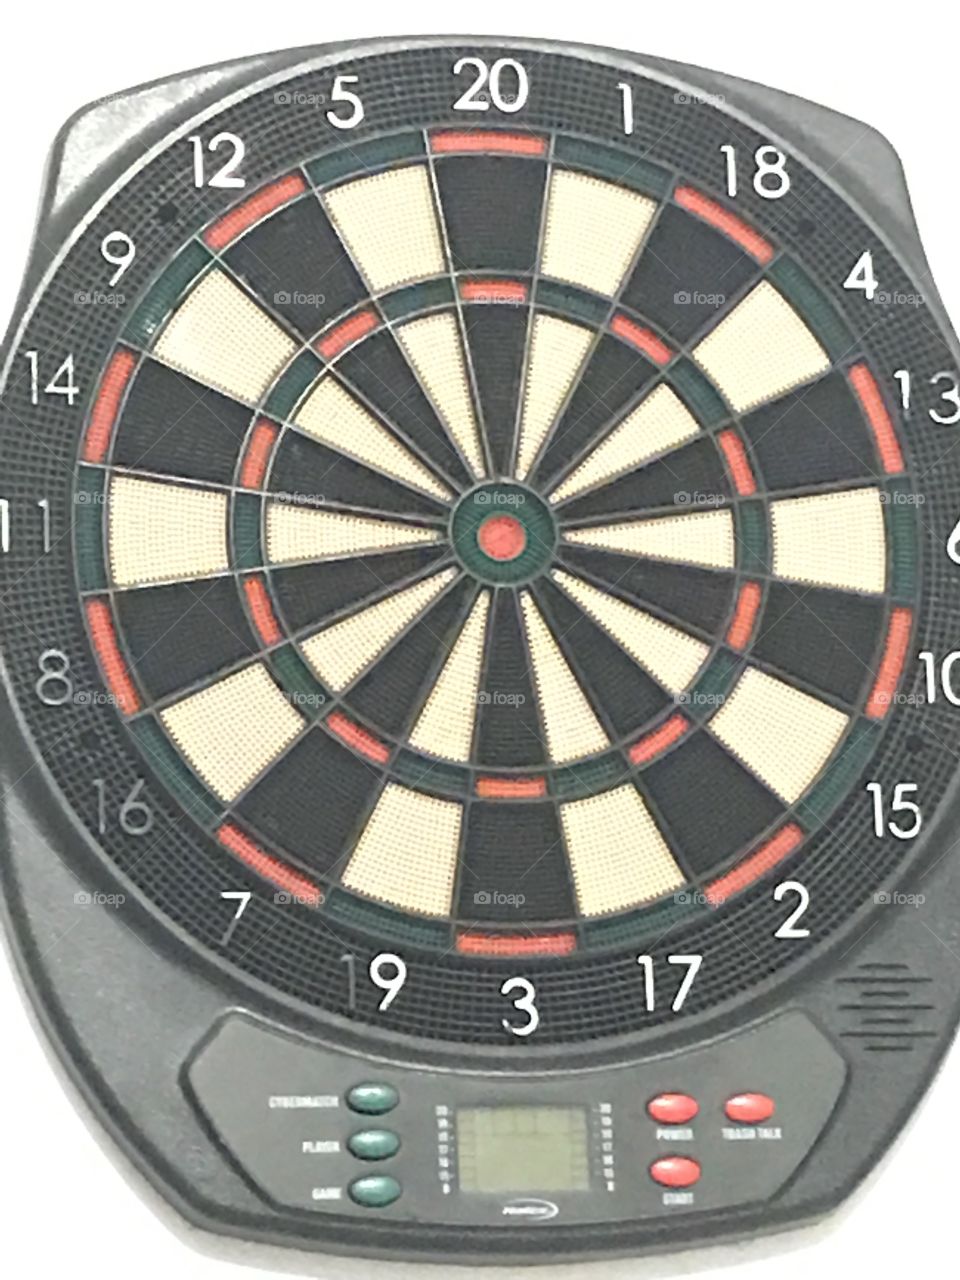 A dartboard